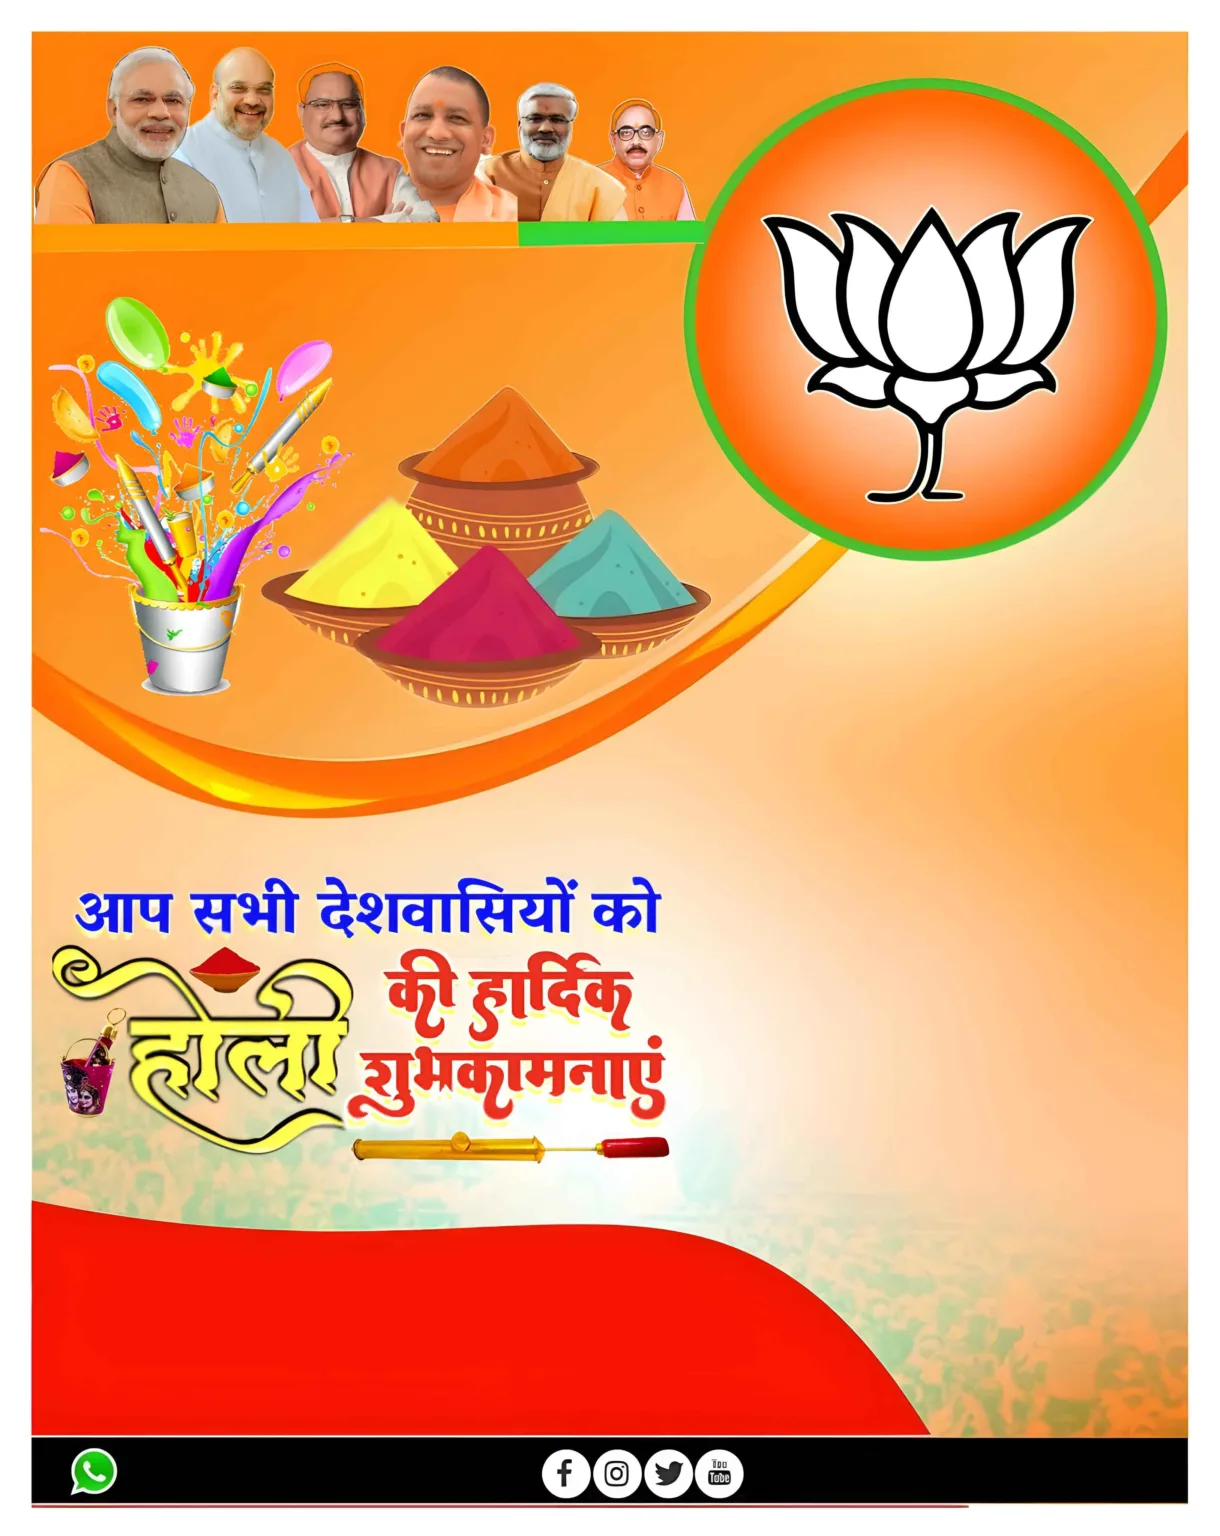 Happy Holi BJP Banner Background Image full HD